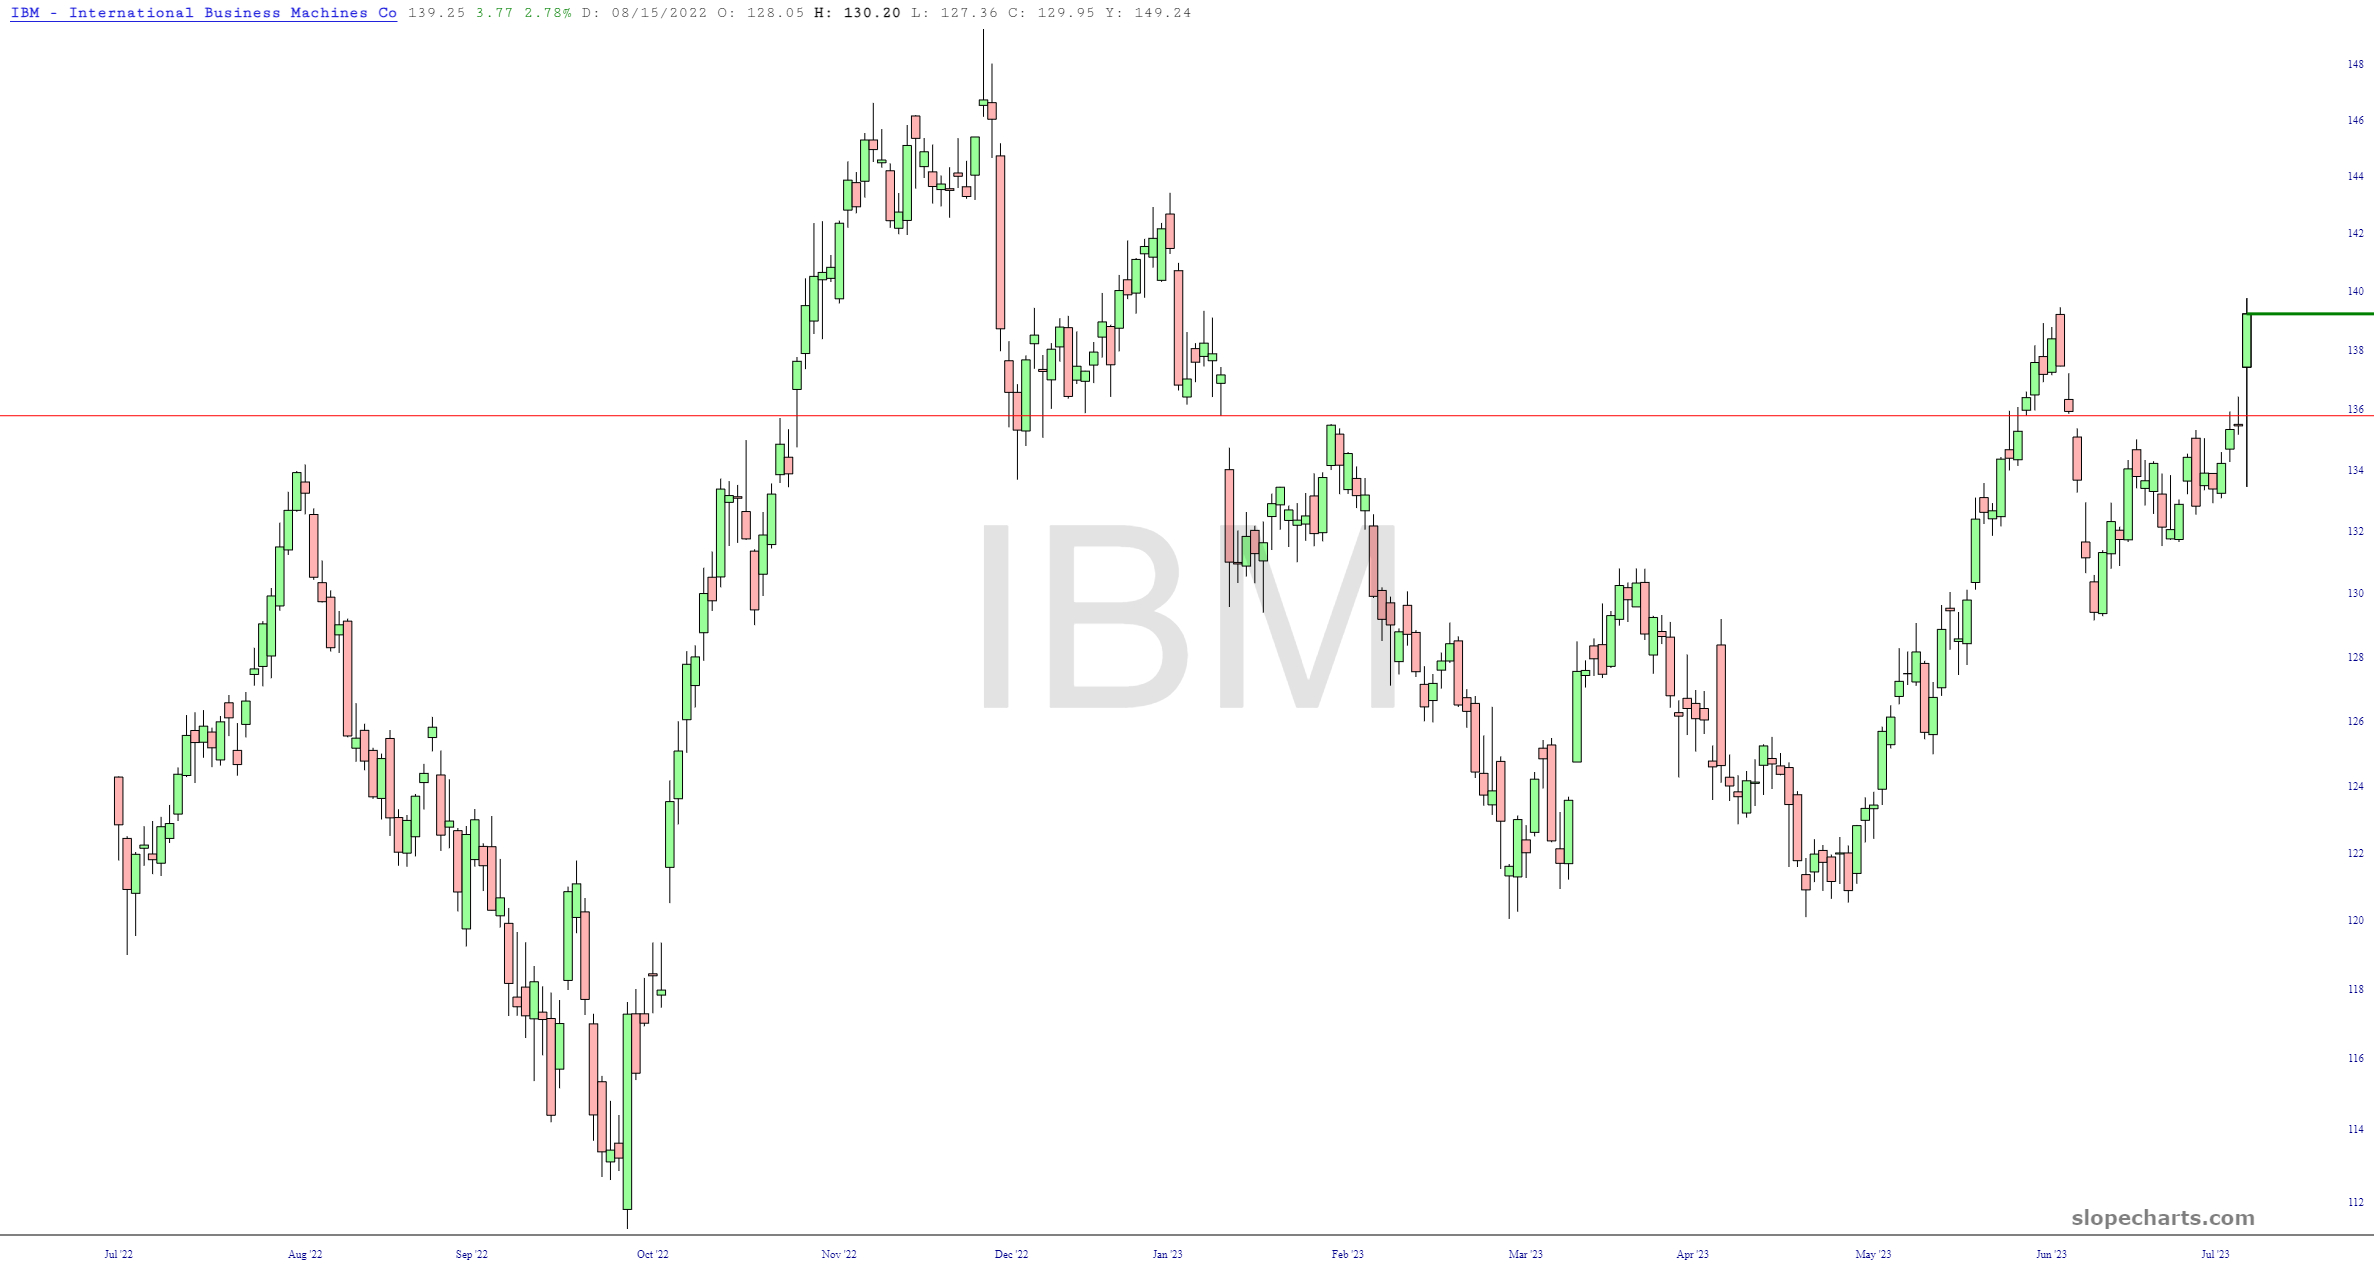 IBM Chart